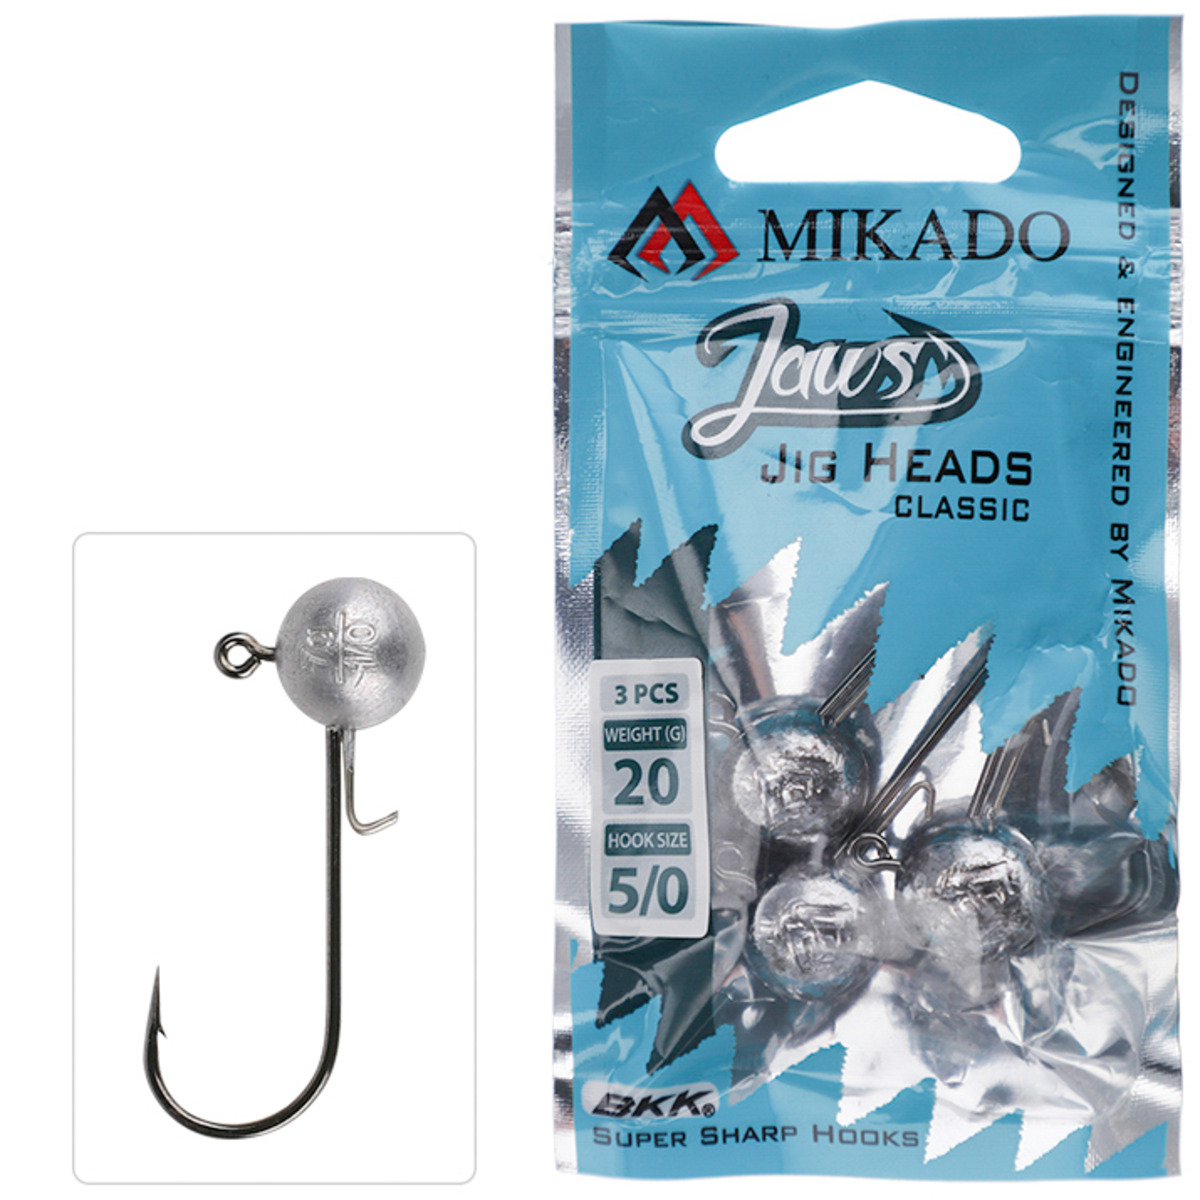 Mikado Jig Head Jaws Classic 40g - 5 / 0 BN